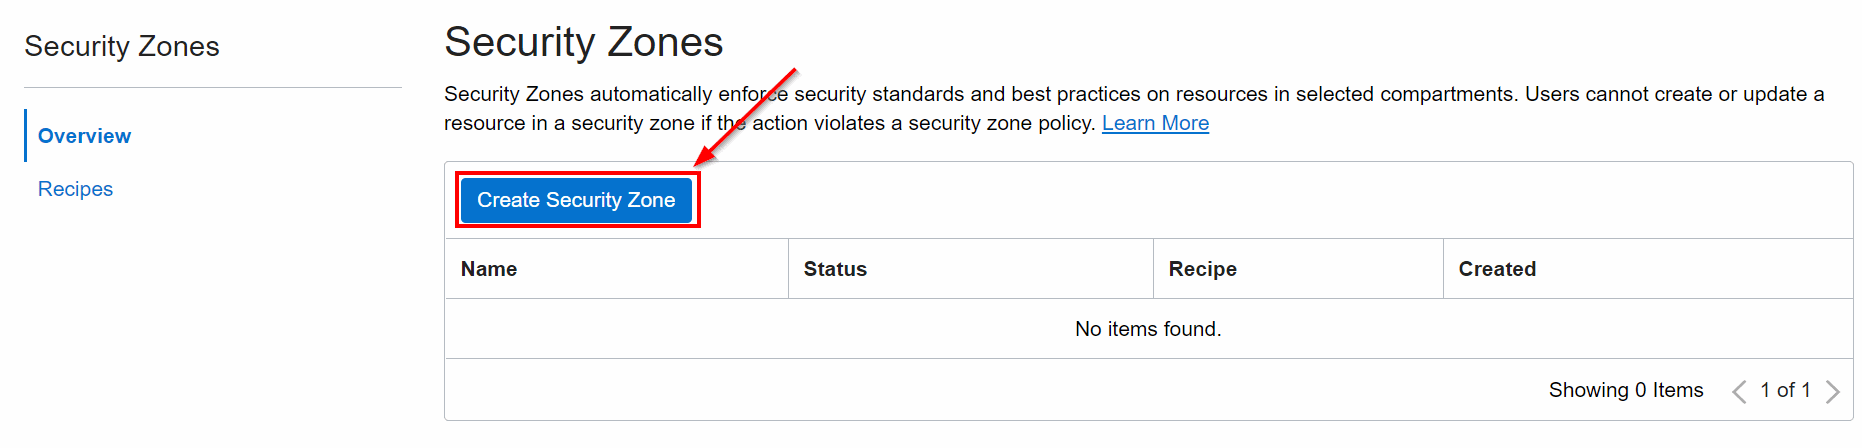 create security zone1